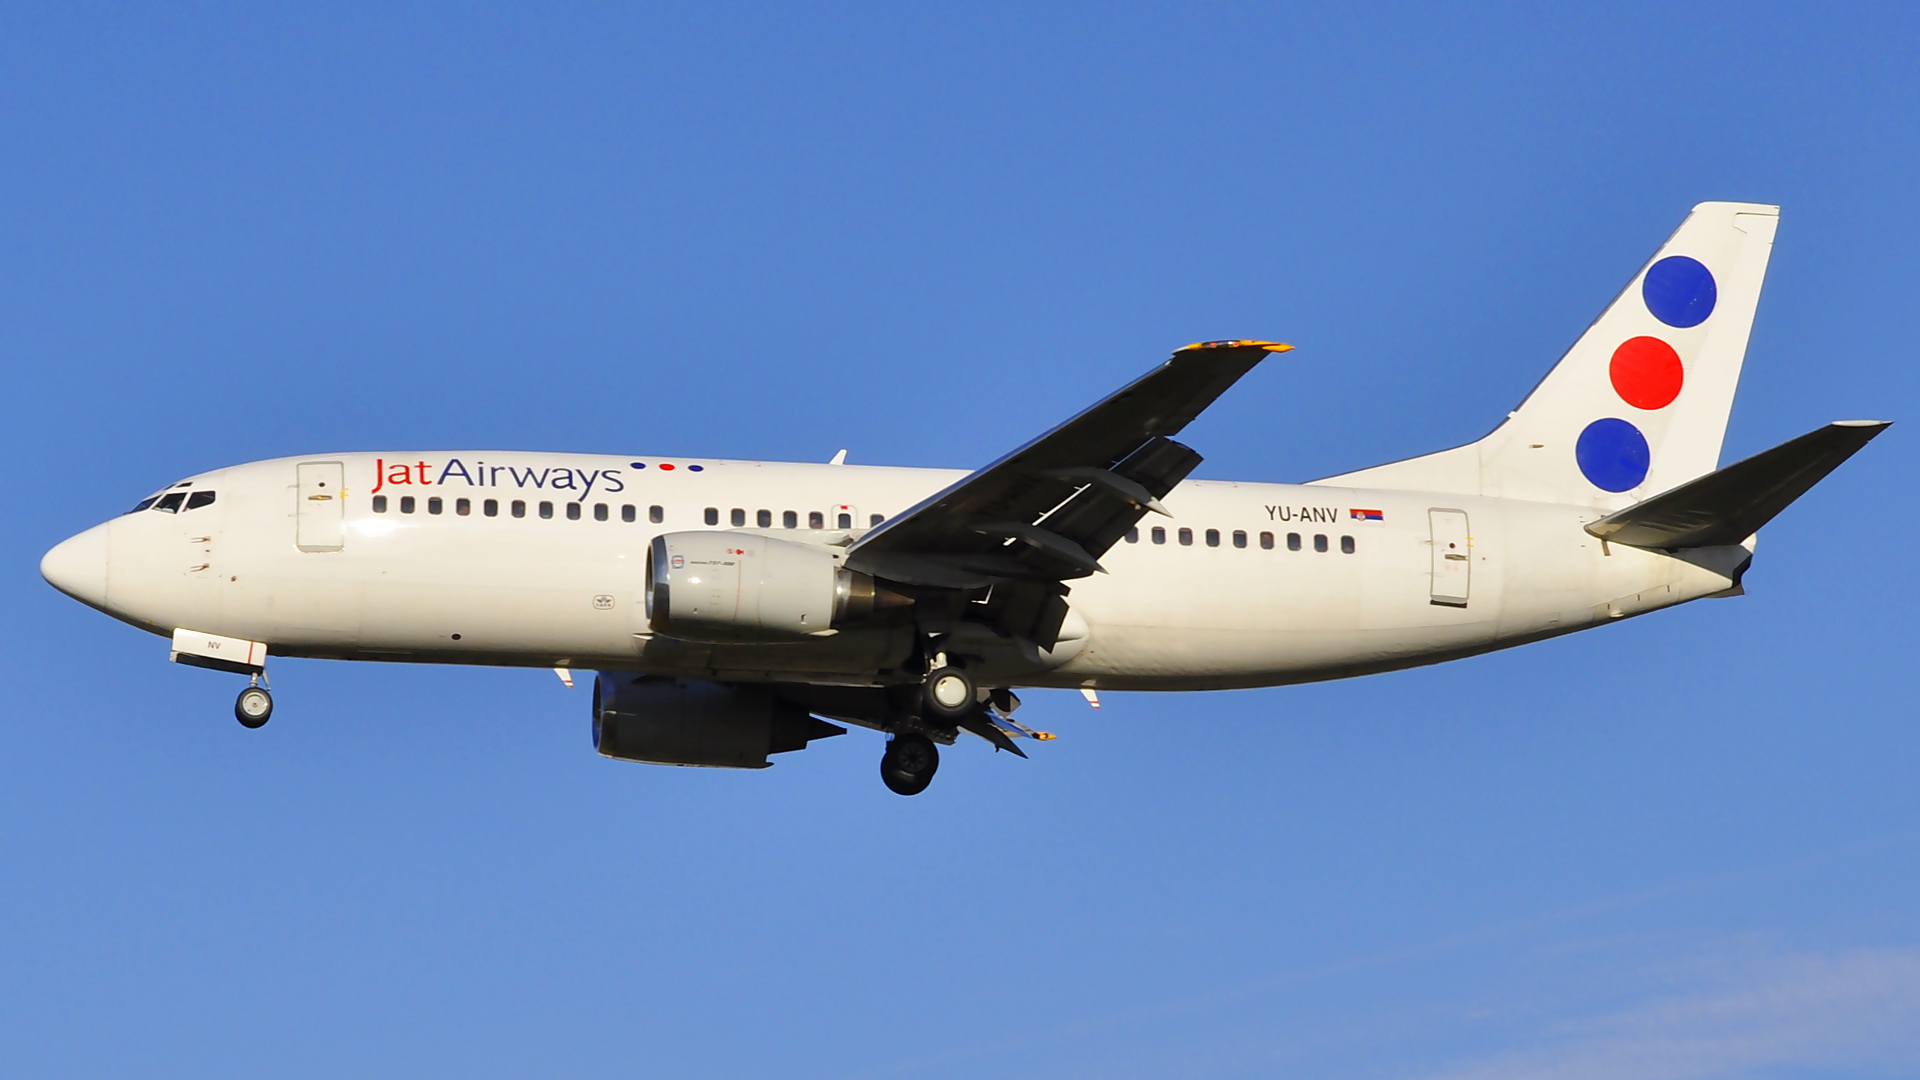 YU-ANV ✈ Jat Airways Boeing 737-3H9 @ London-Heathrow